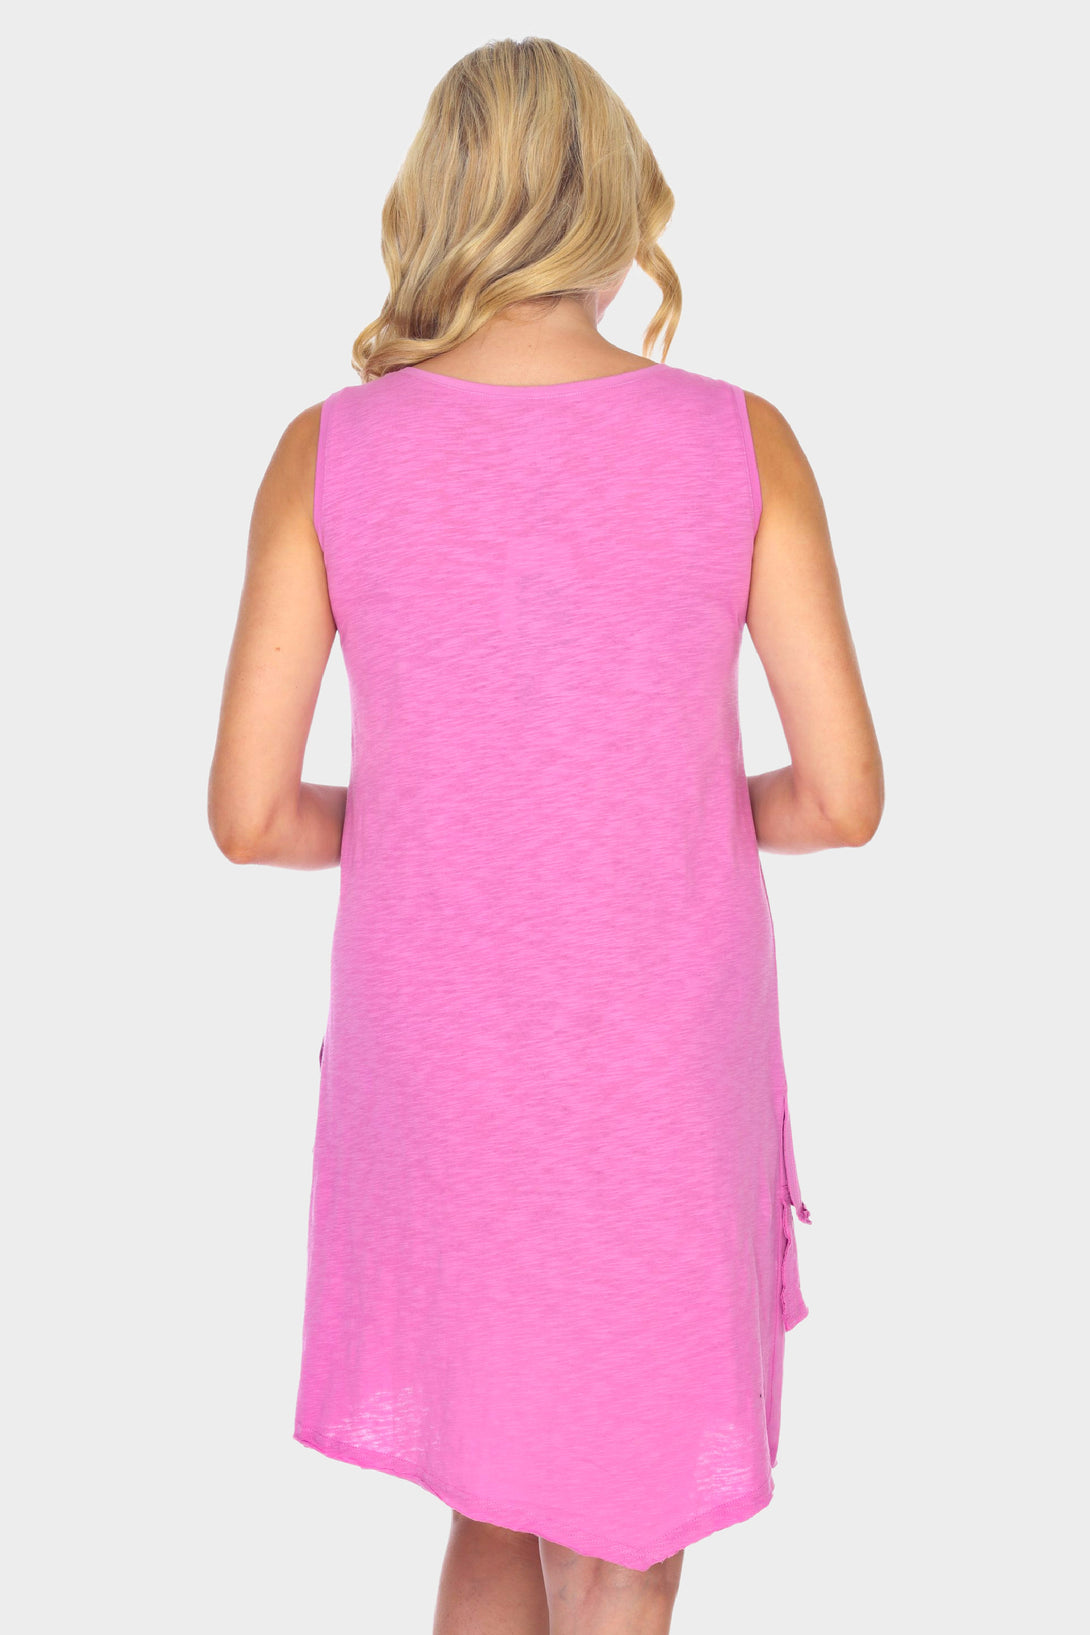 NeonBuddha-Oasis-Dress-Cotton-Knit-Verbena-Pink